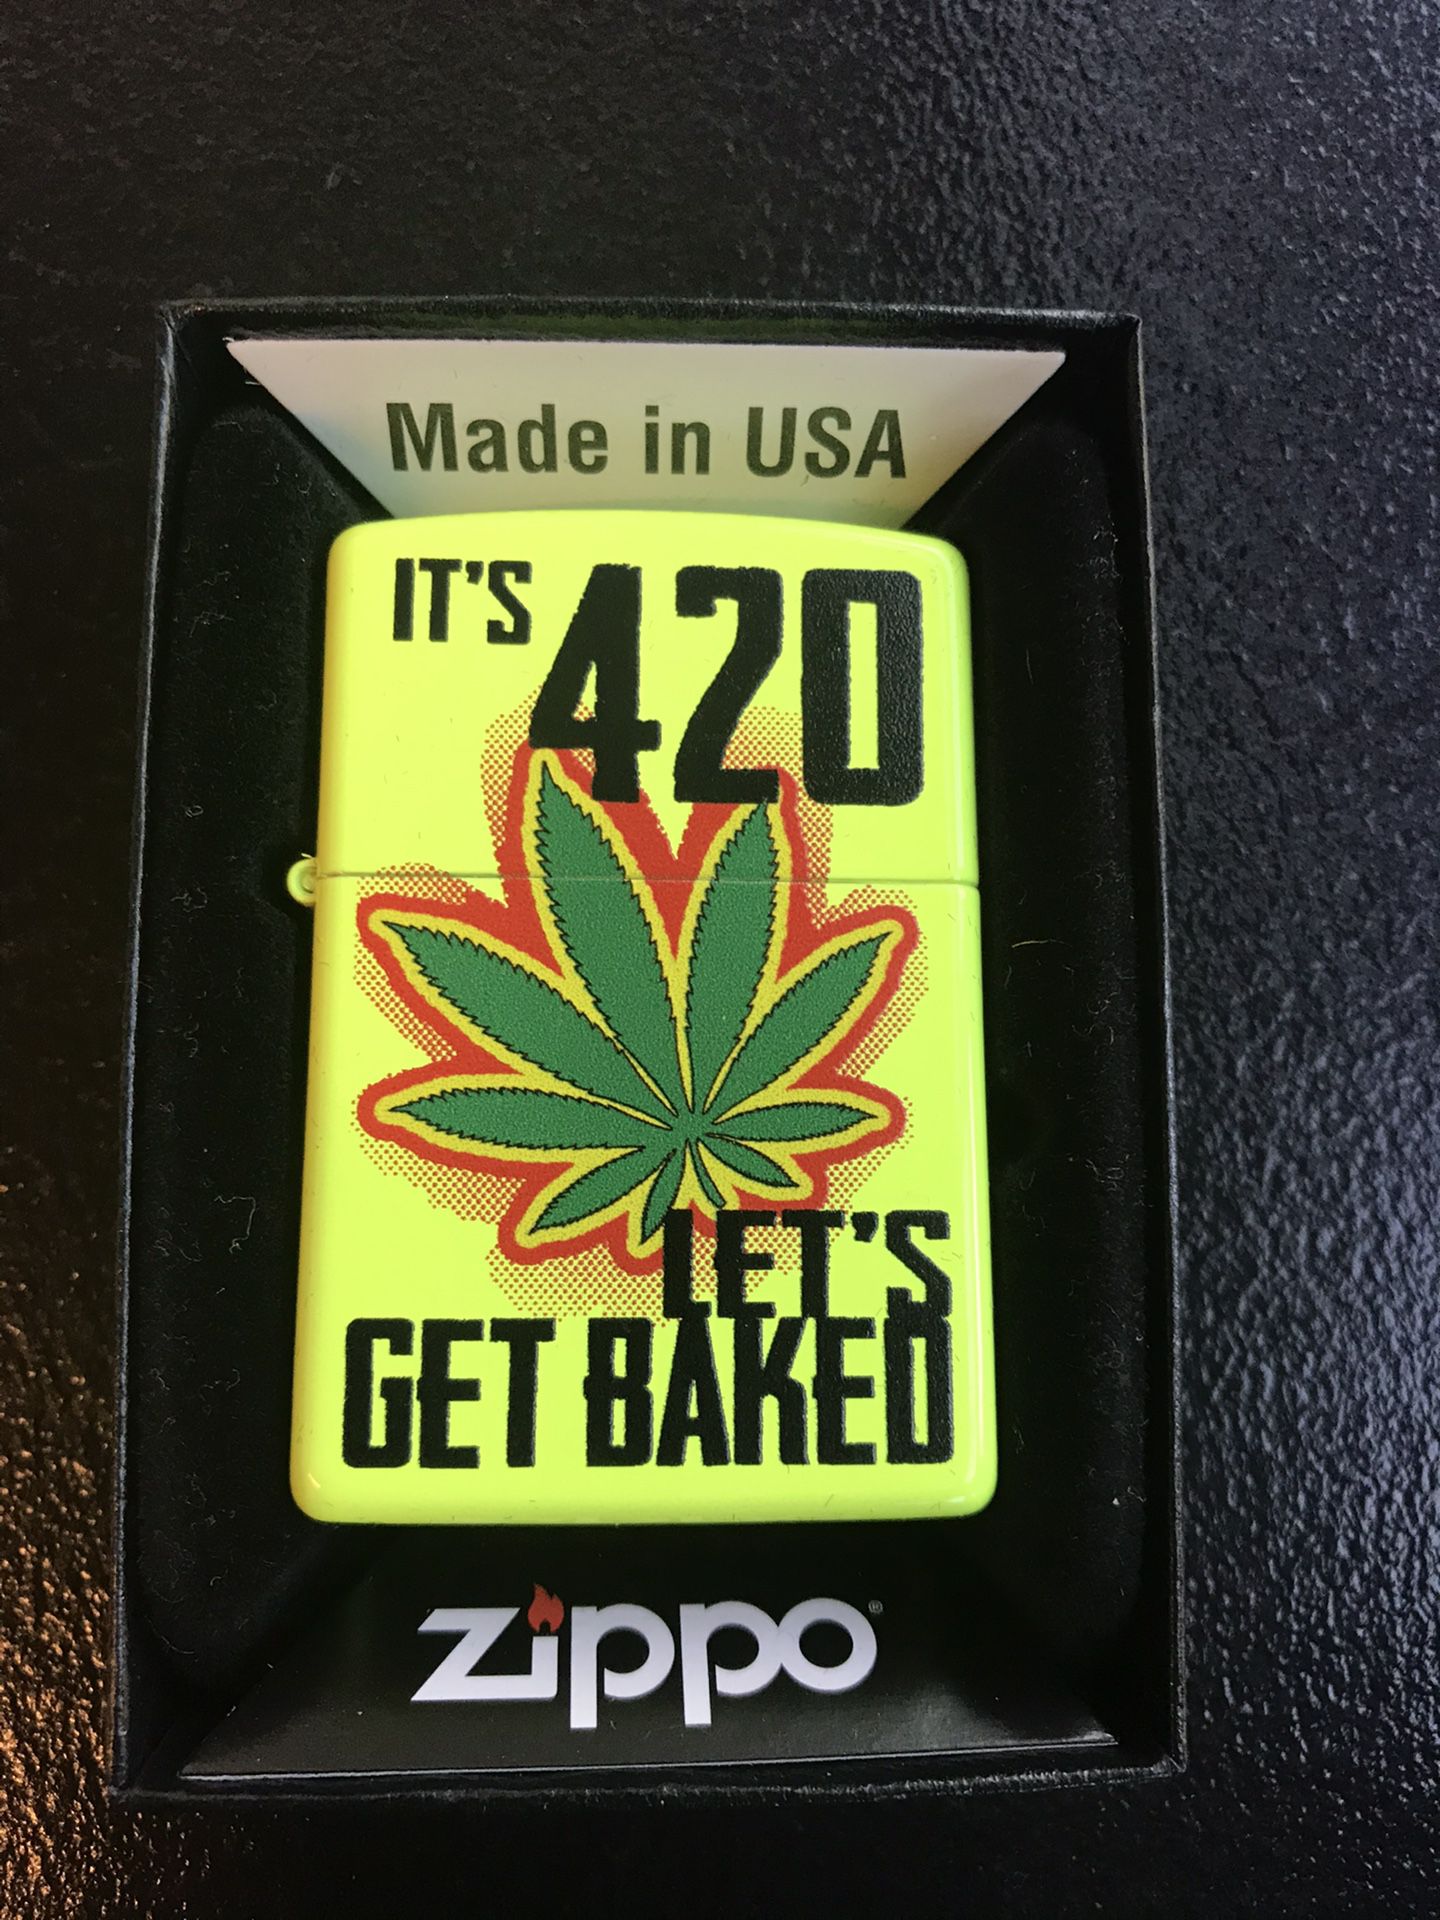 Zippo lighters. Stoner edition.